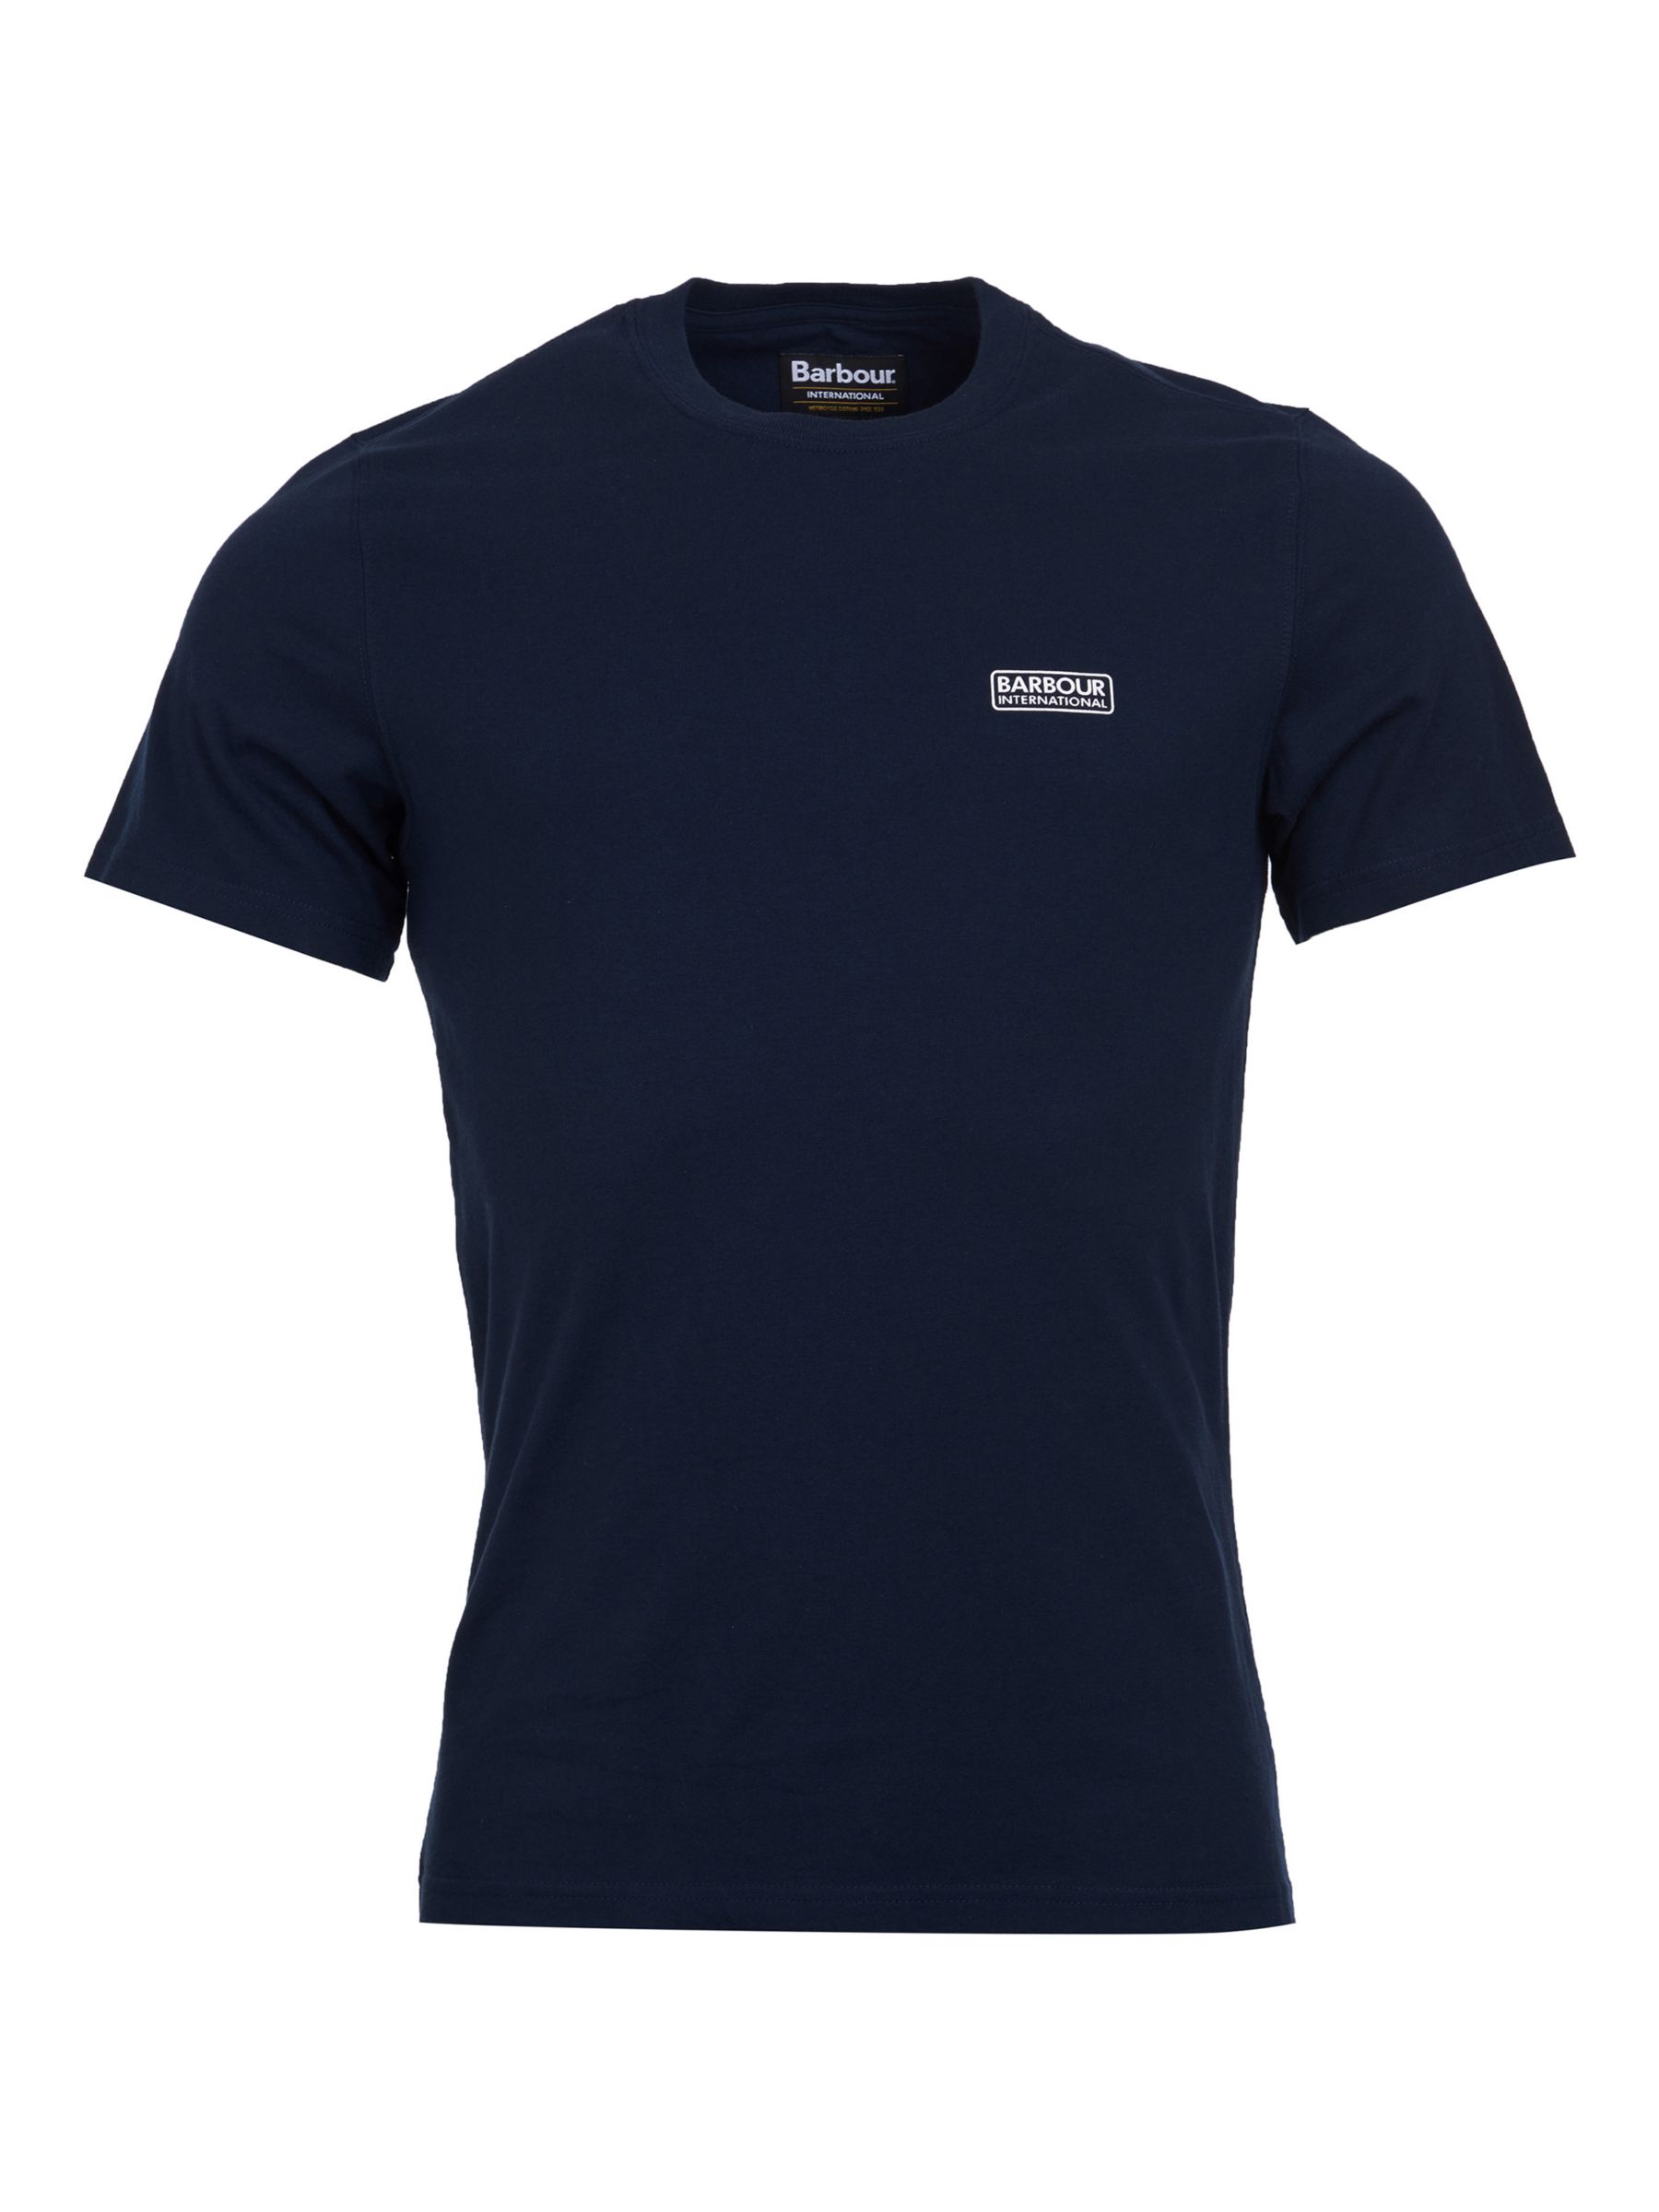 Barbour International Slim Fit Crew T-Shirt, Navy at John Lewis & Partners